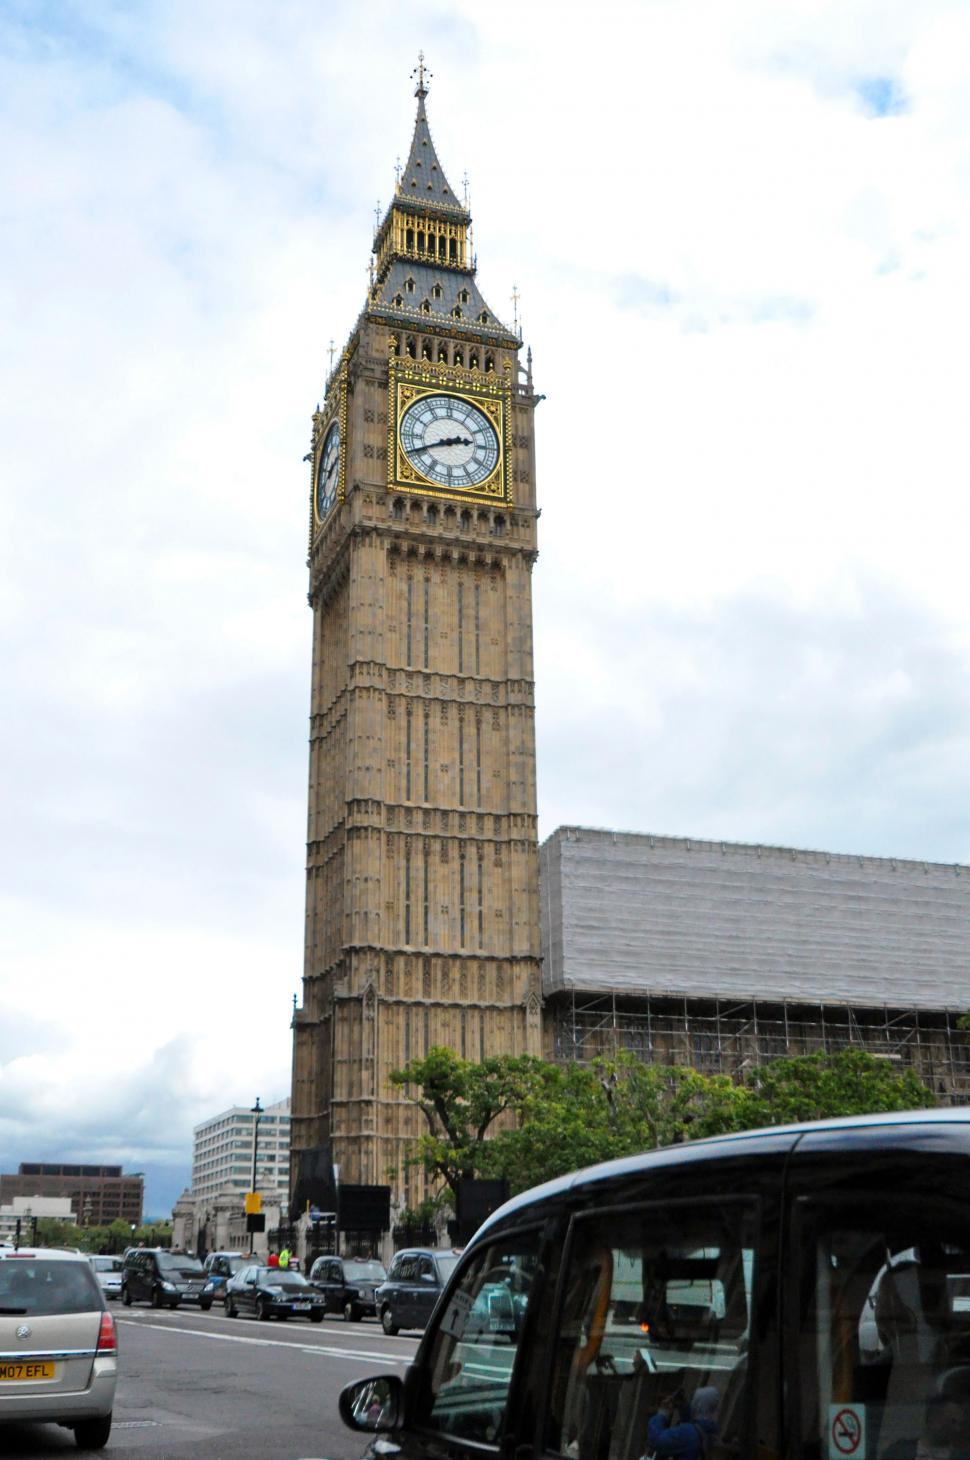 Free Image of London Big Ben & Taxi 